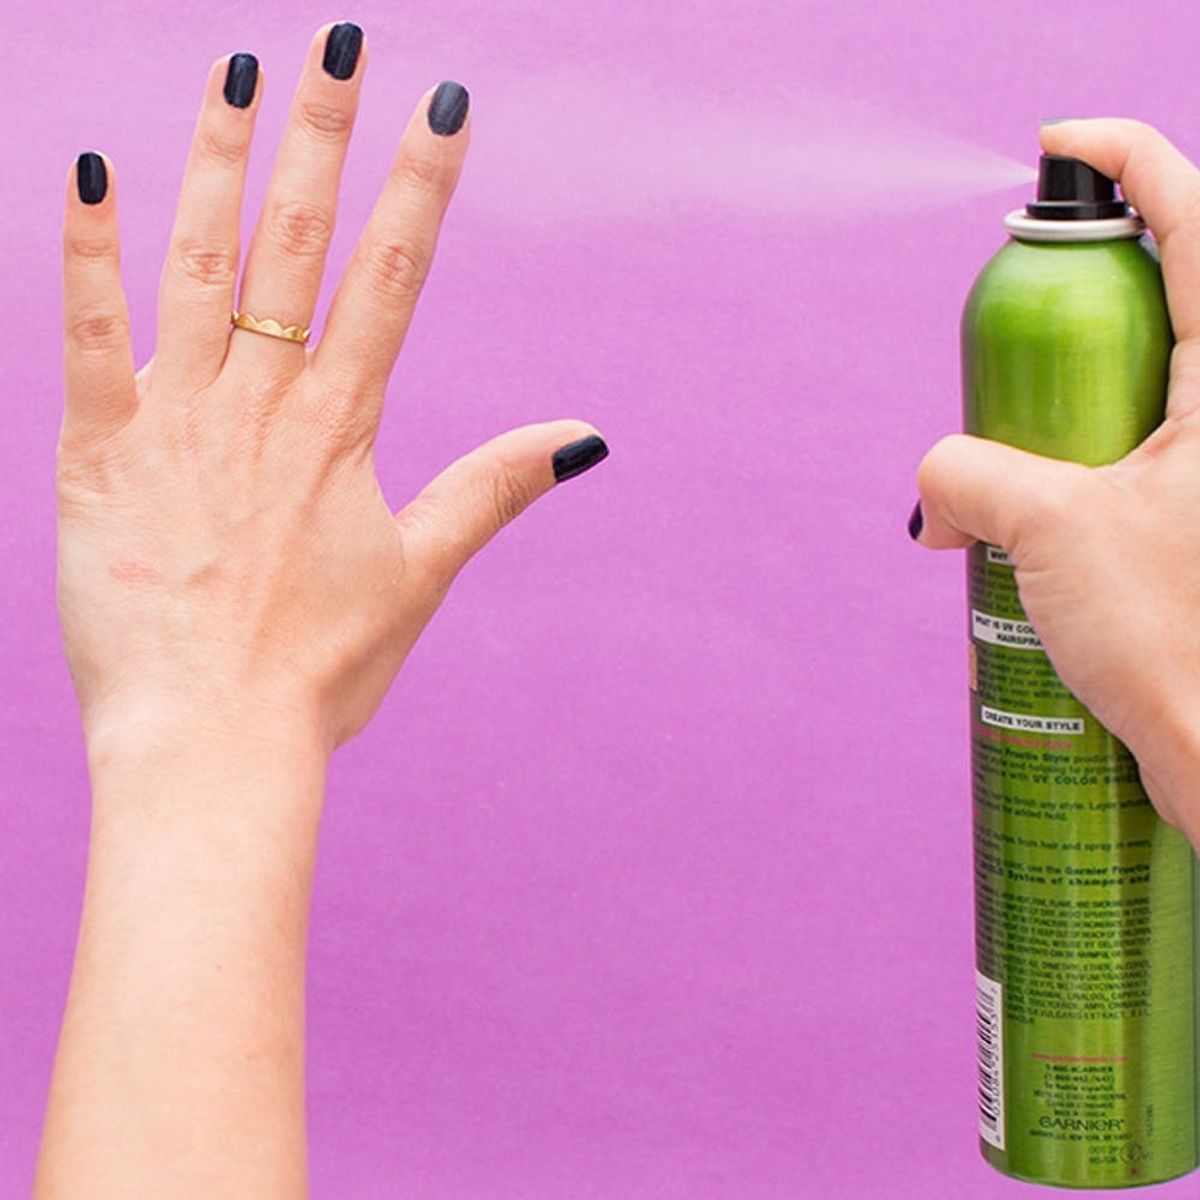 Beauty Mythbuster: Is Hairspray REALLY the Secret to Speedy Nail Polish Drying?